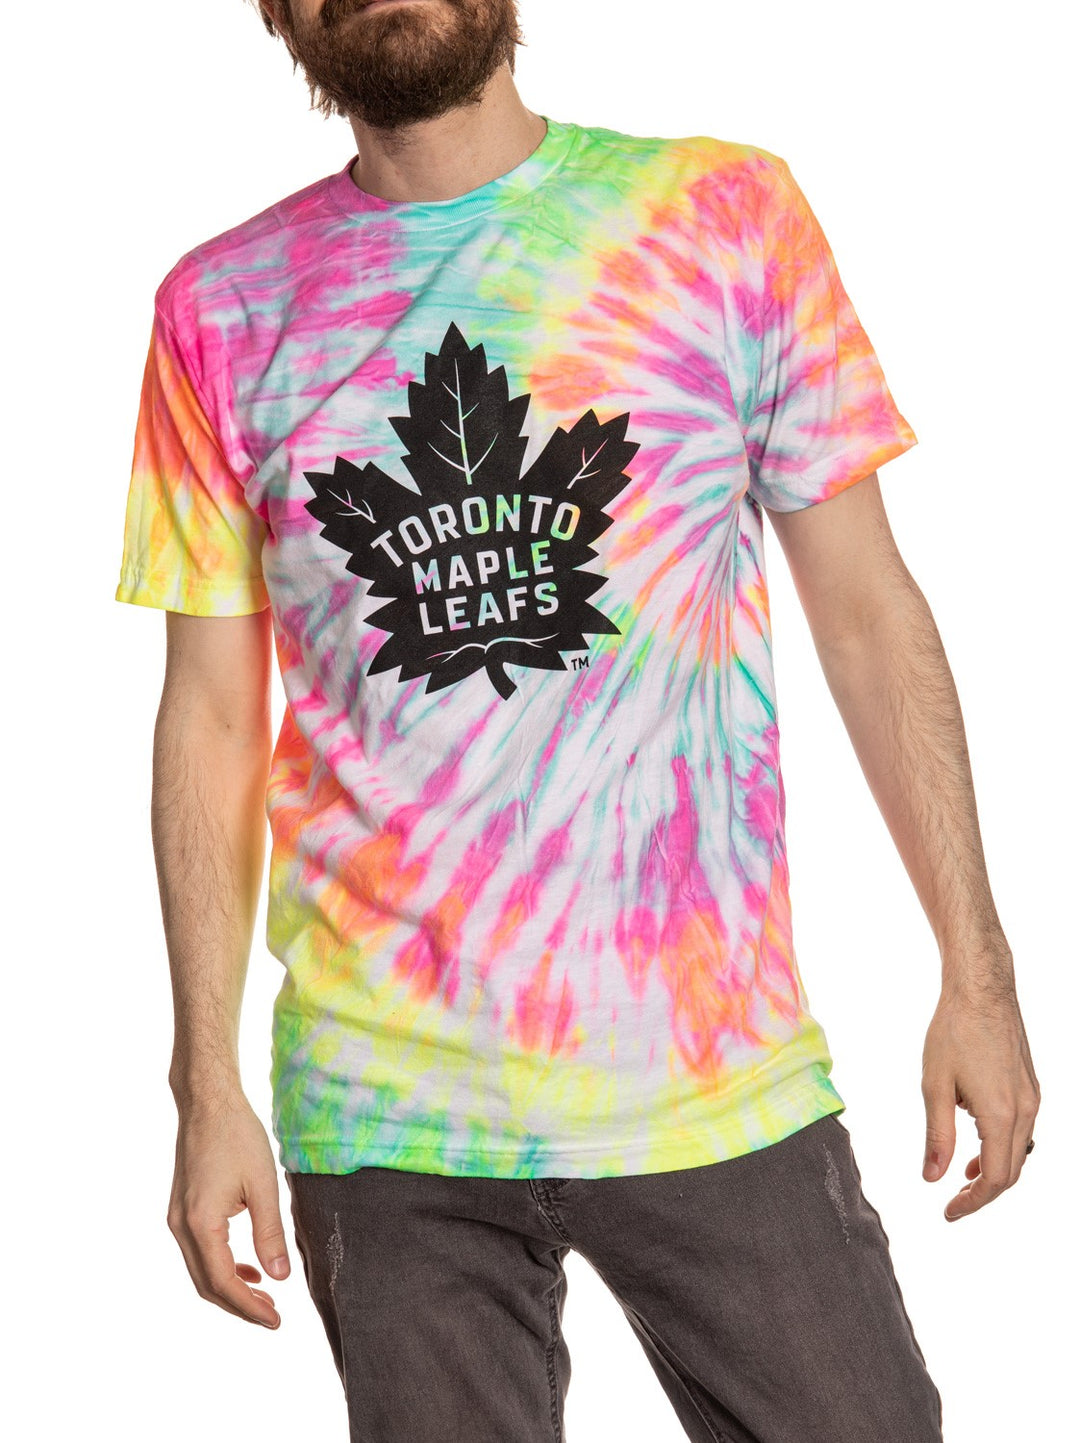 Toronto Maple Leafs Rainbow Neon Tie Dye Front View